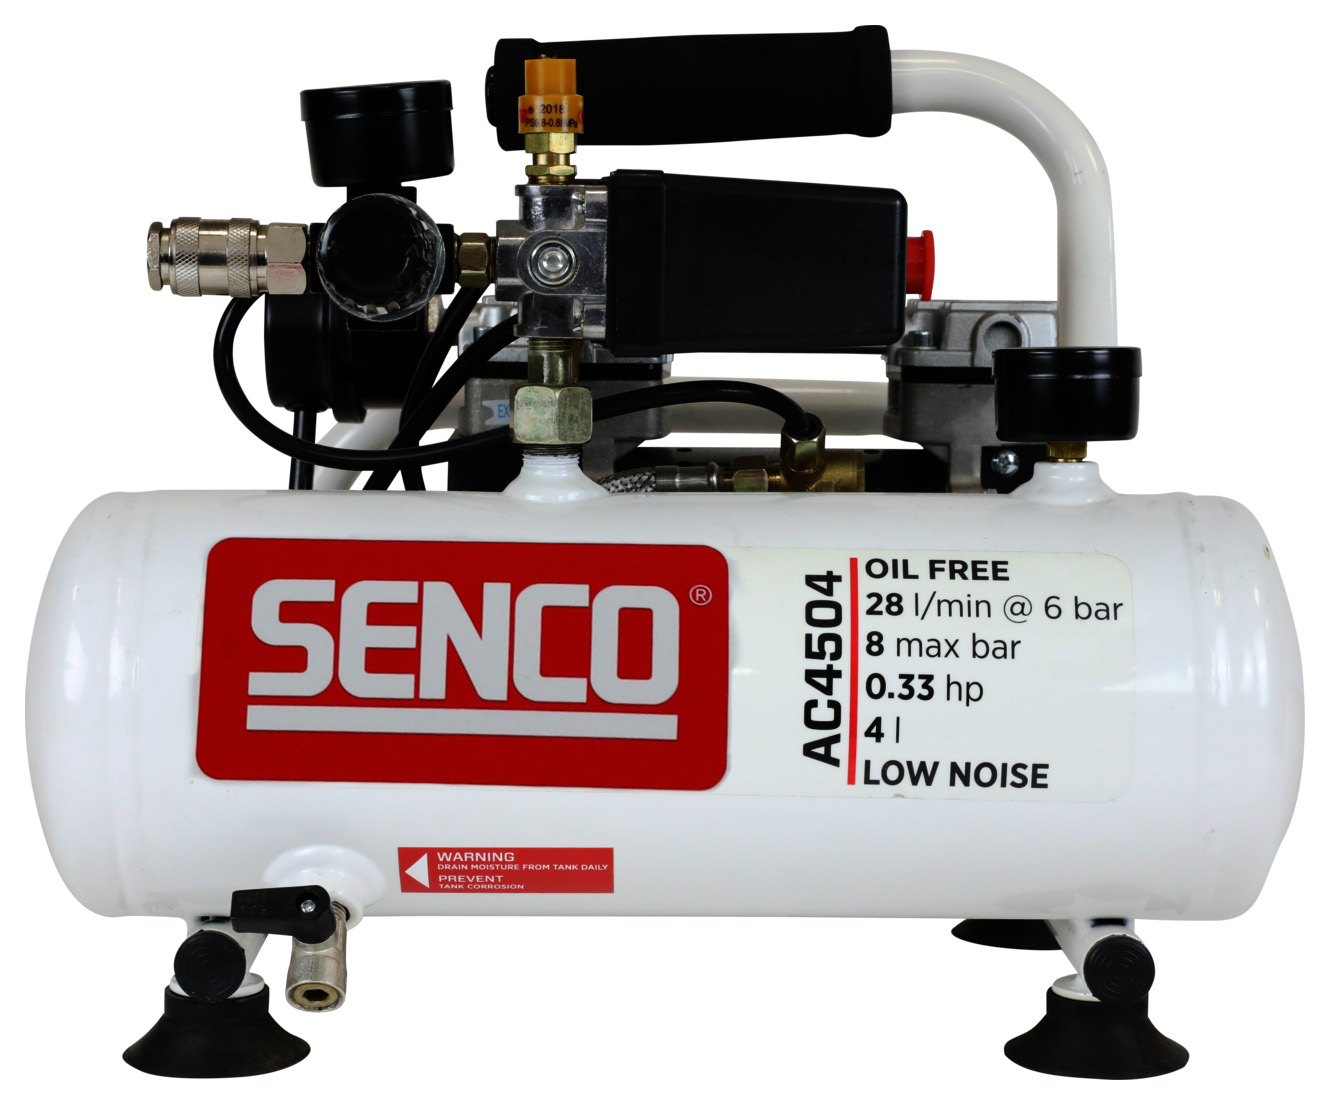 Senco AC4504 4L Low Noise Oil Free Air Compressor - 110V